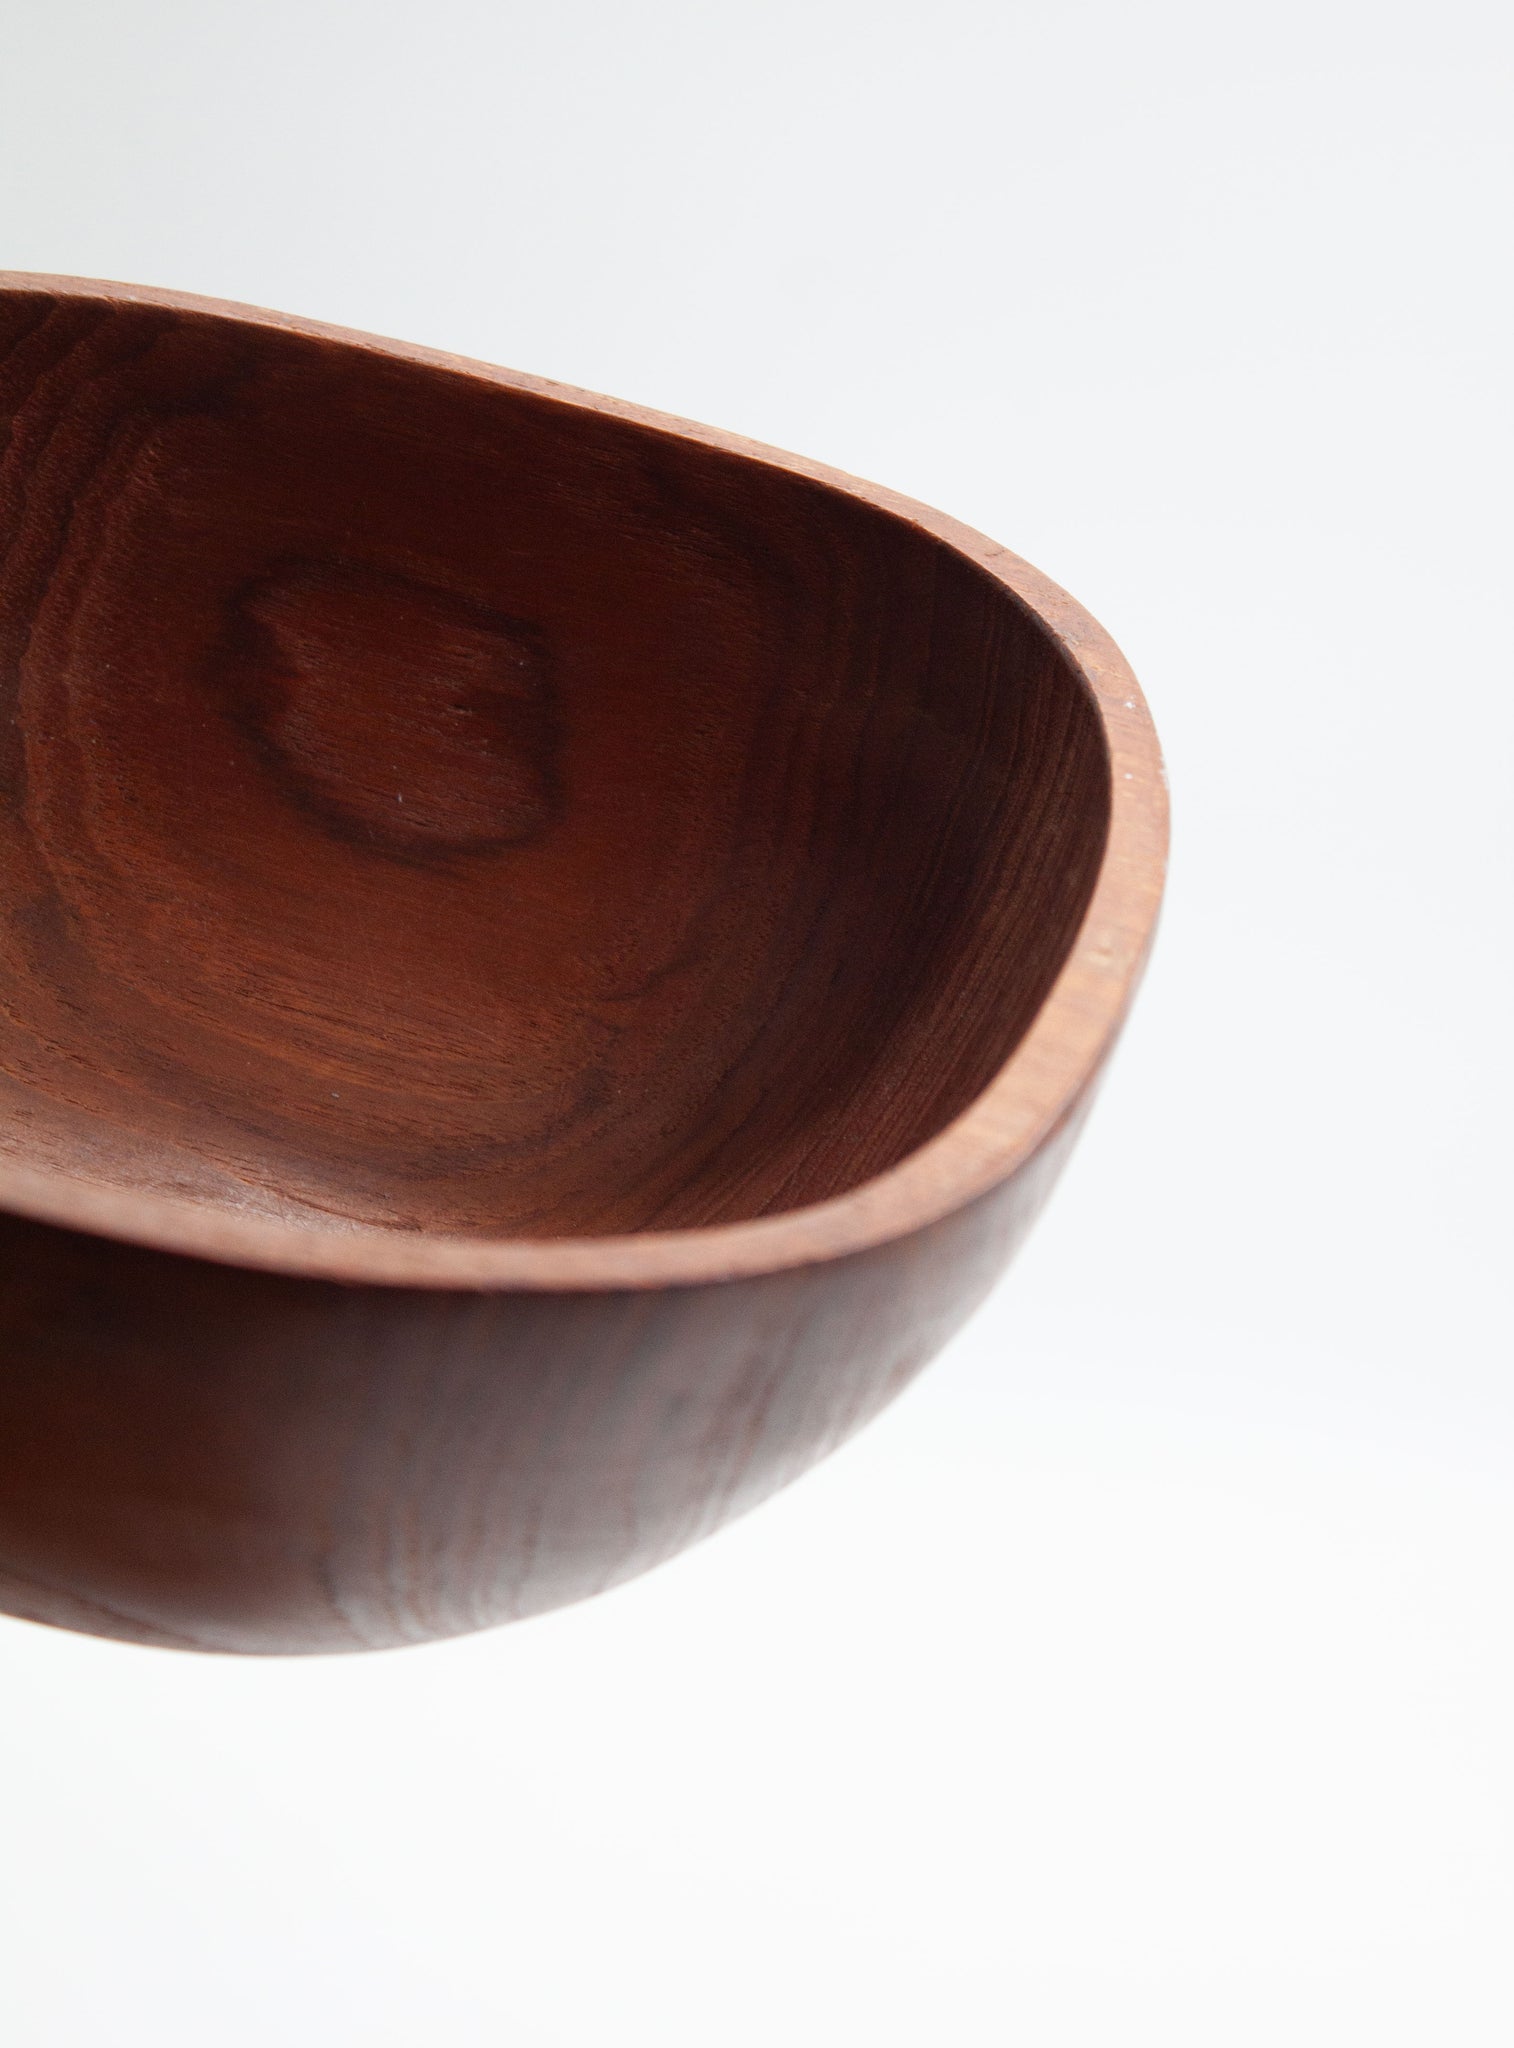 Danish Teak Wooden Bowls